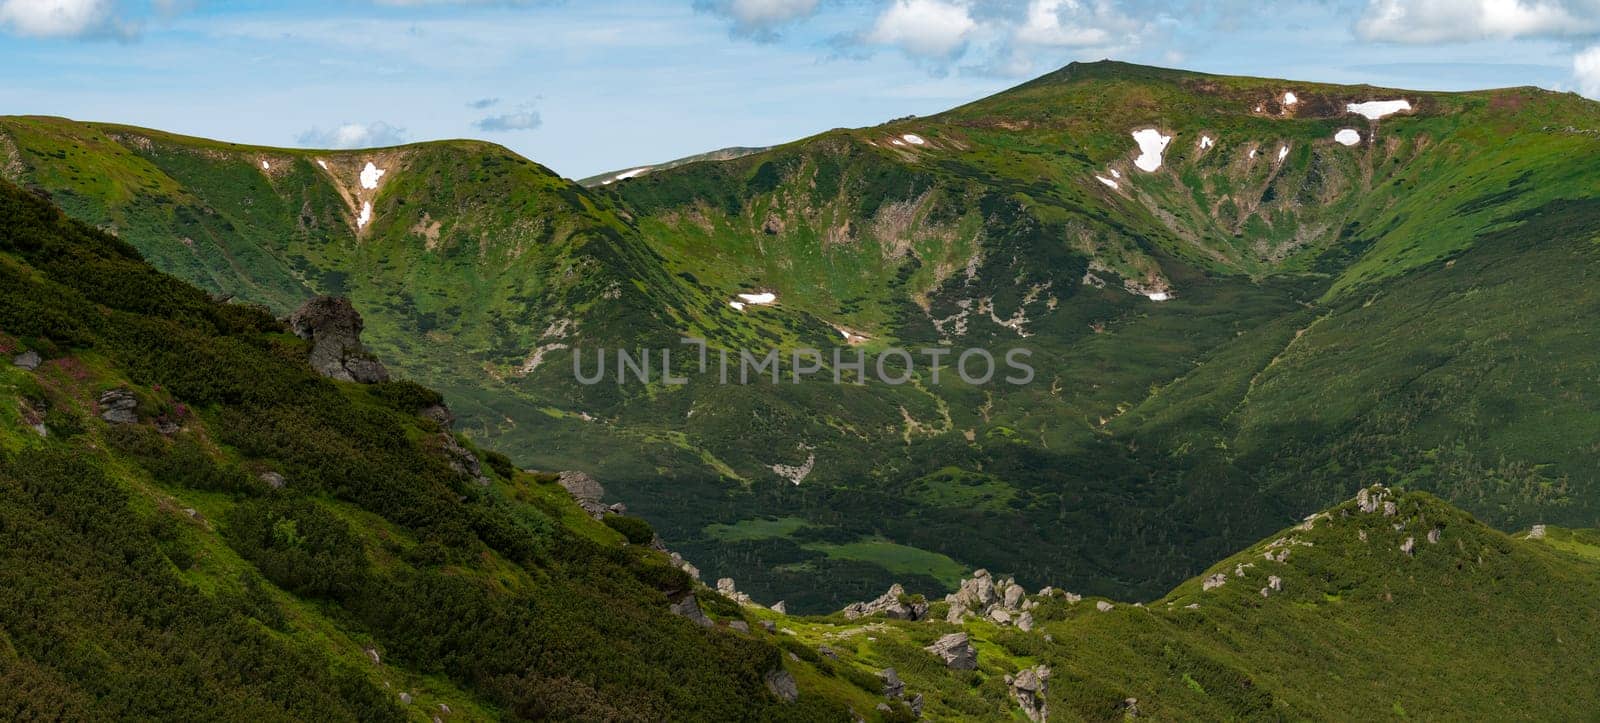 Mountain landscape, view of Mount Menchul in the Ukrainian Carpathians. by Niko_Cingaryuk